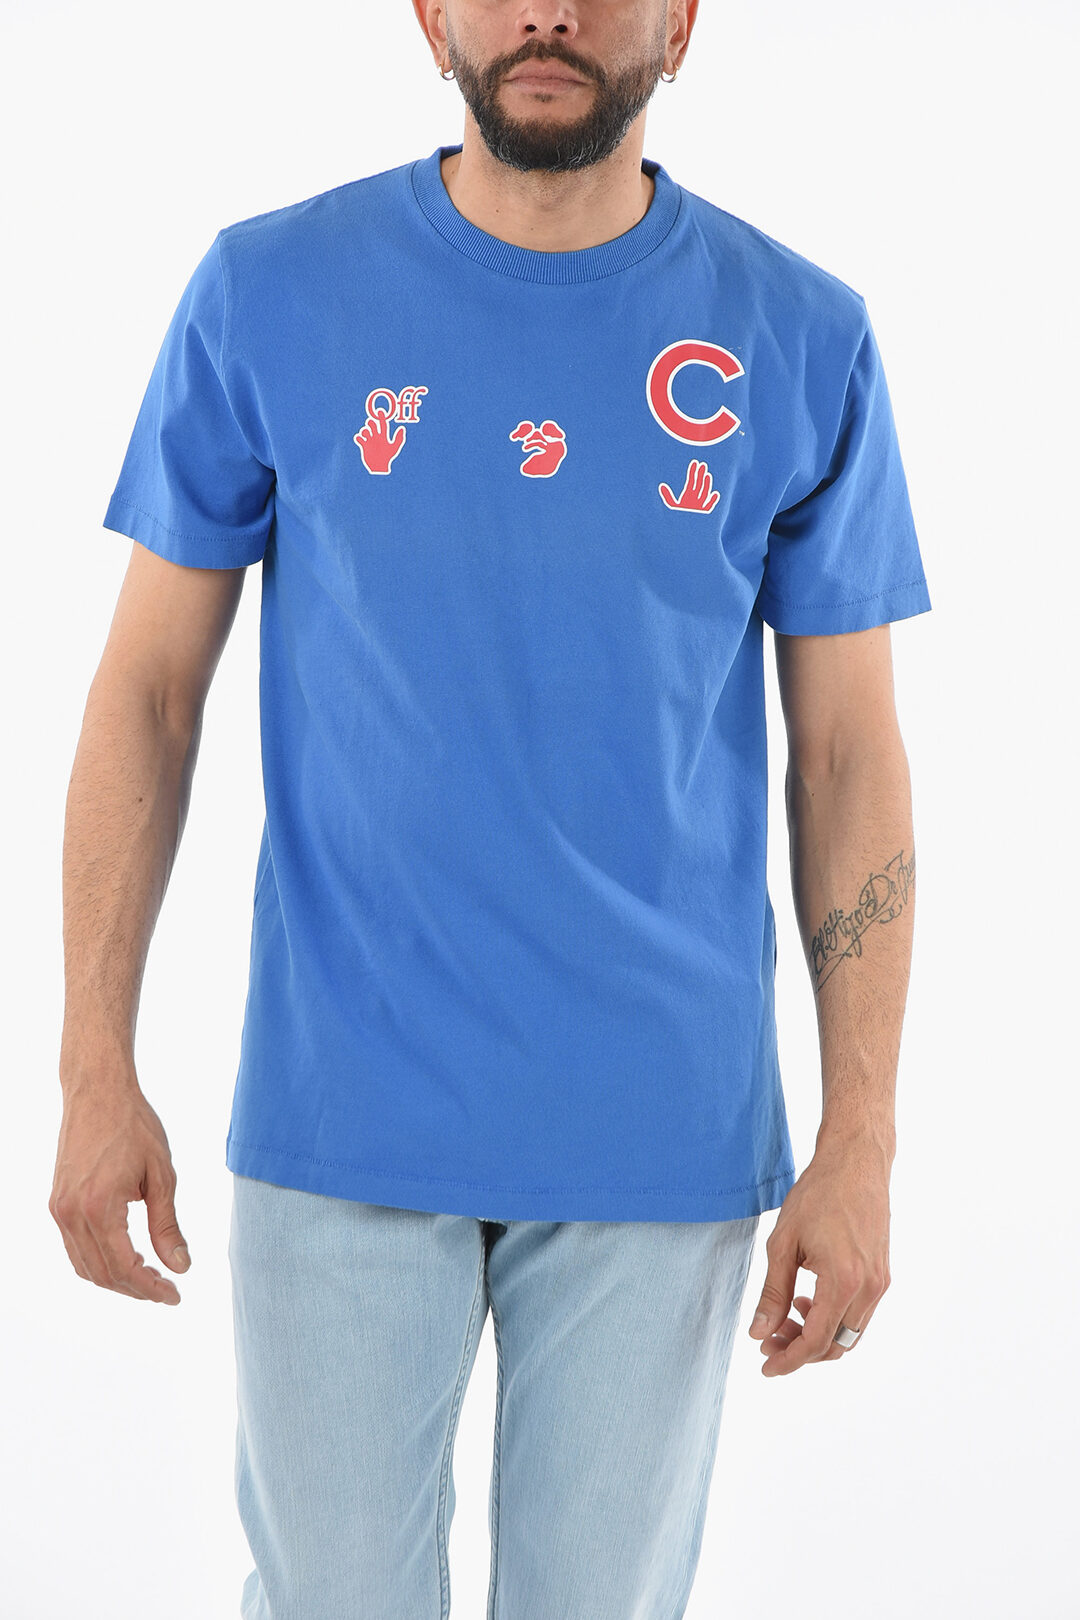 Mlb chicago cubs cotton jersey t-shirt - Off-White - Men